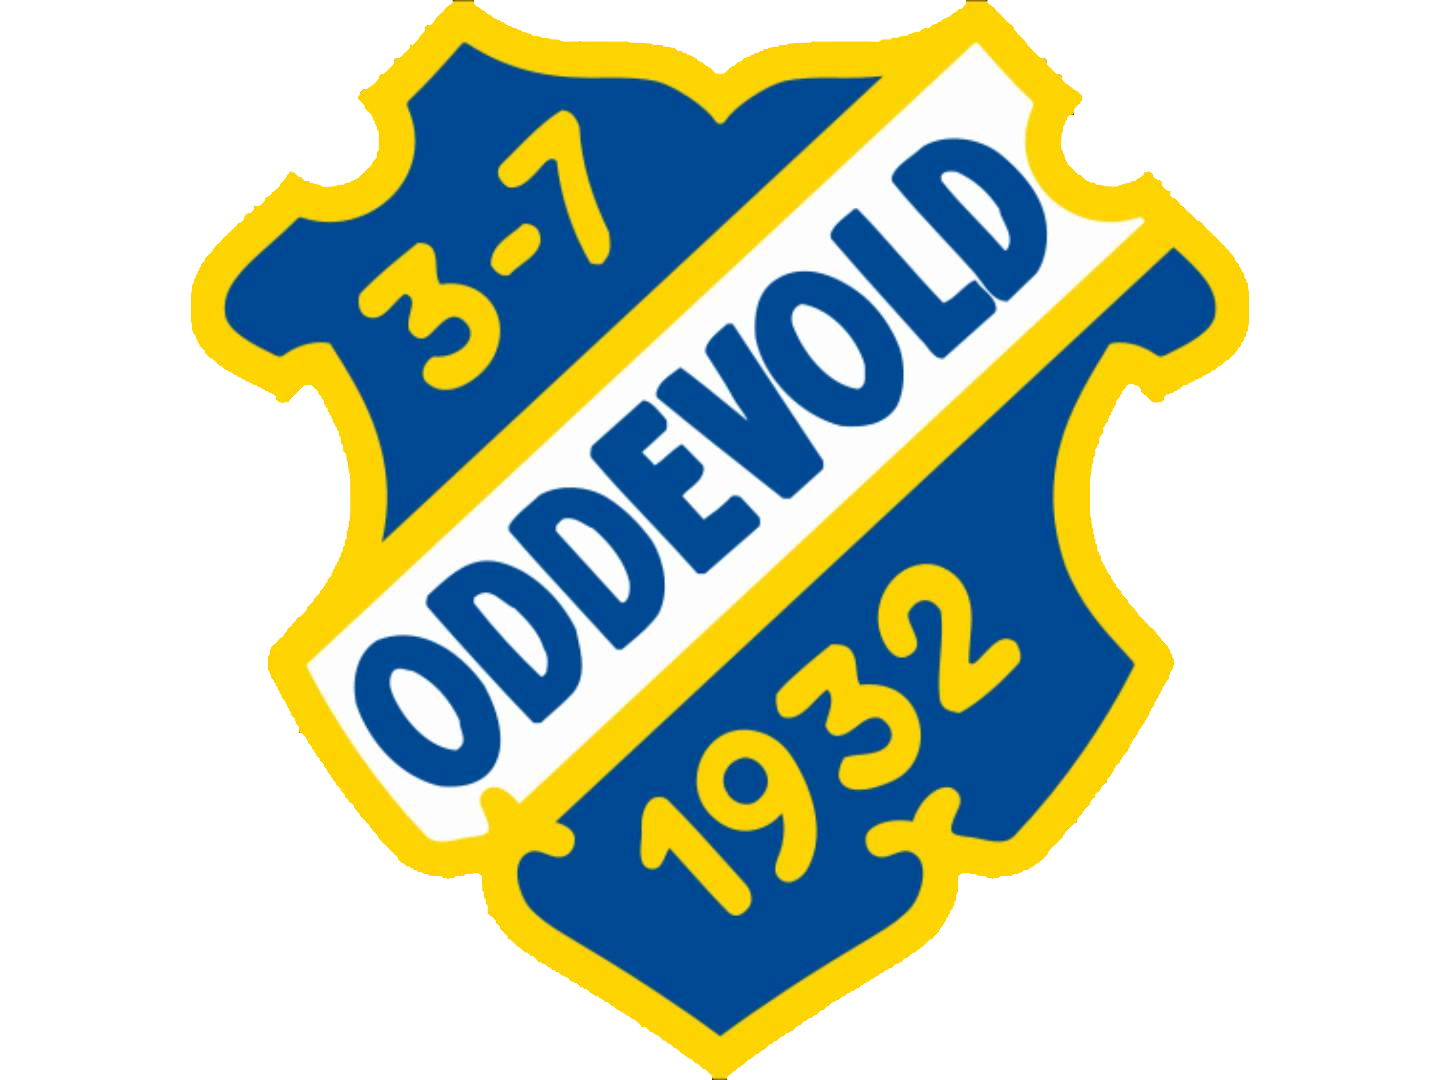 Oddevold logo